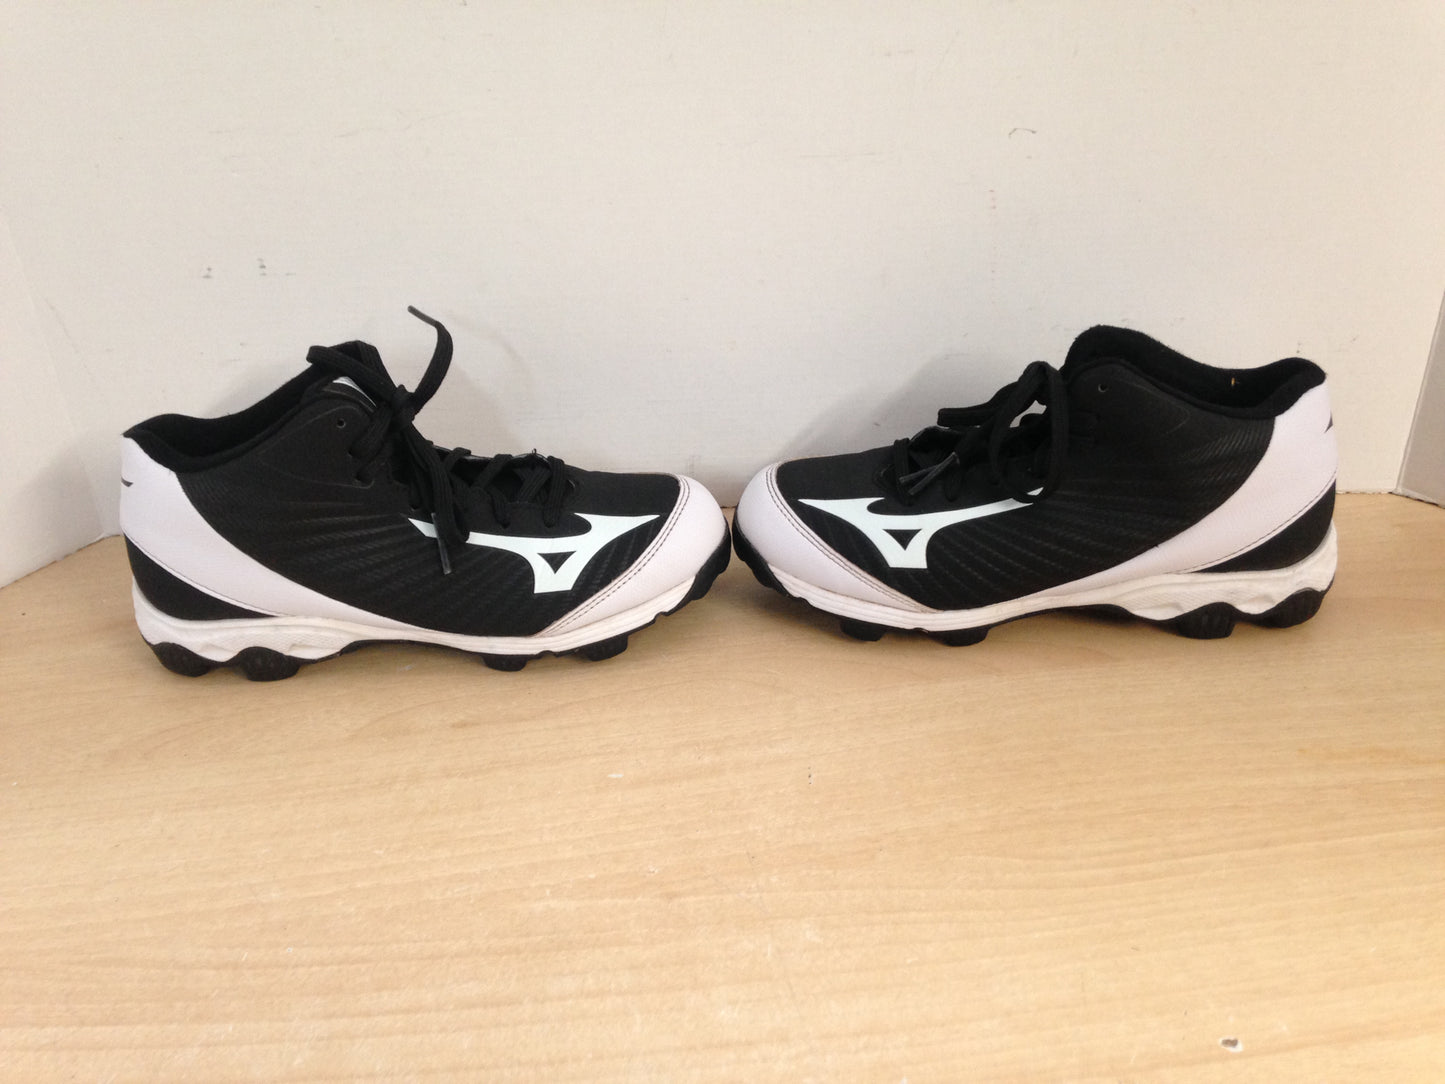 Baseball Shoes Cleats Child Size 4 Mizuno Black White